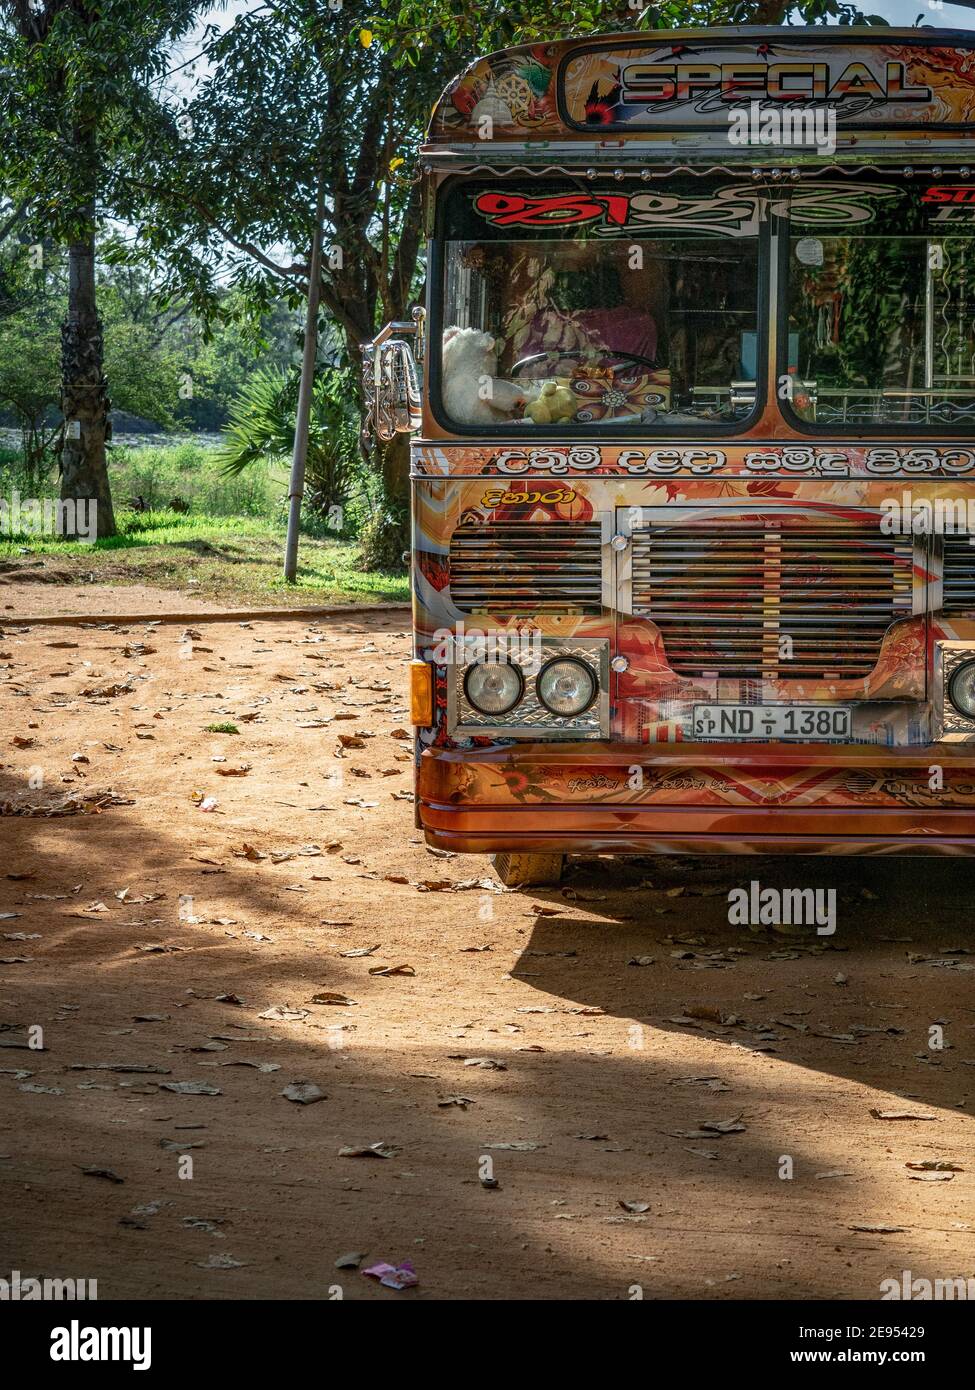 Colorful bus in Sri Lanka. Local transportation. Stock Photo